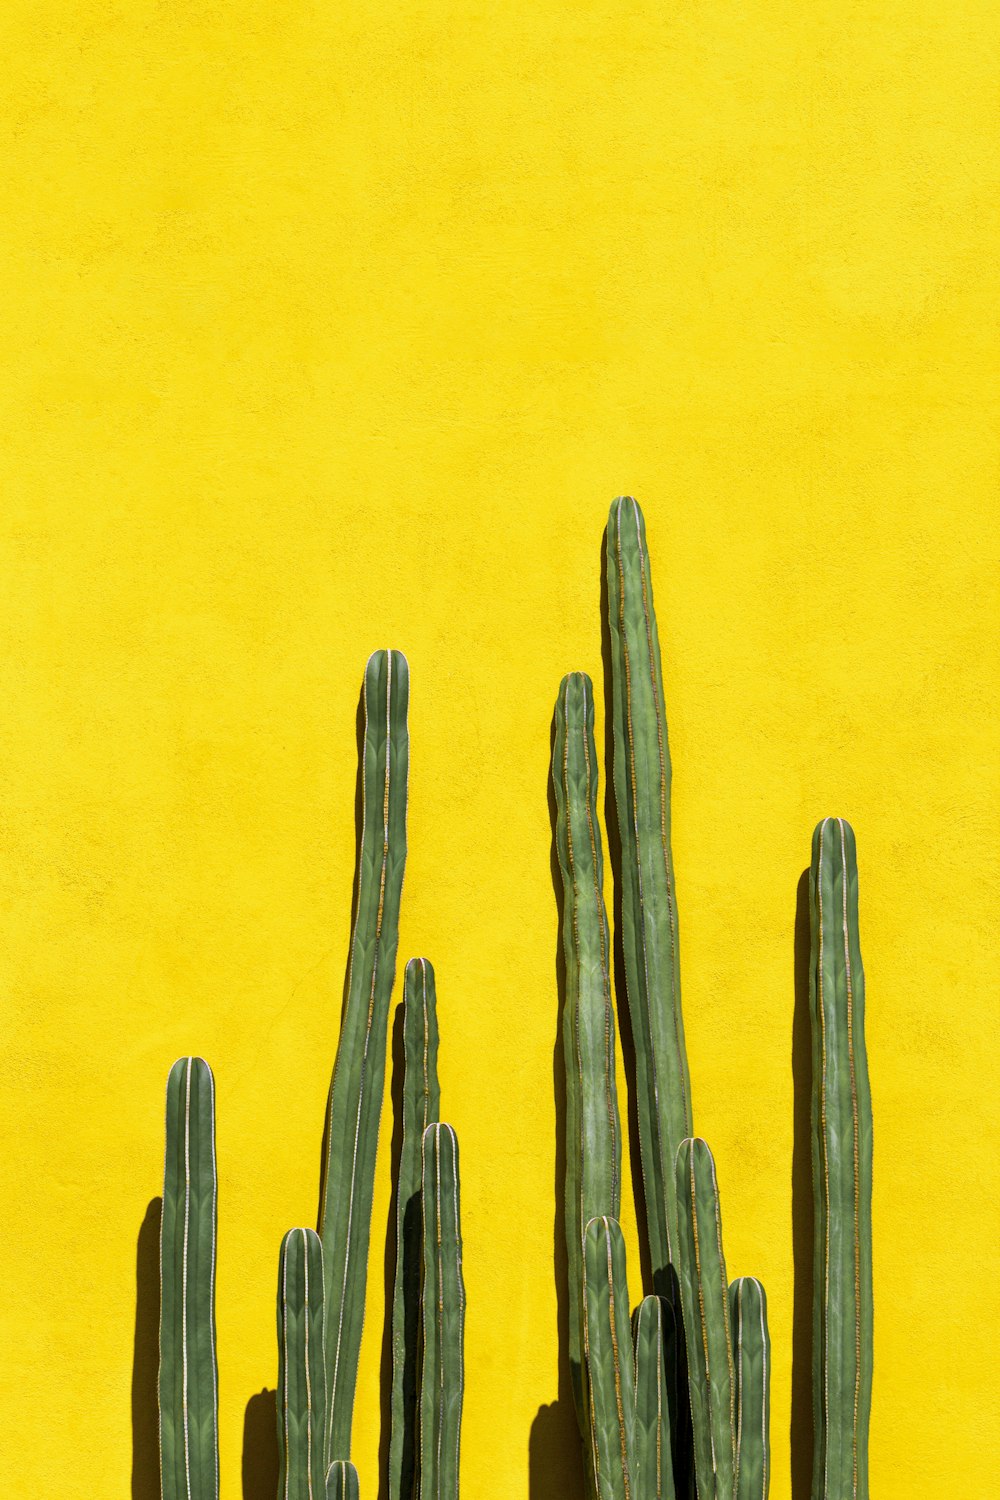 brown cactus plant on orange background